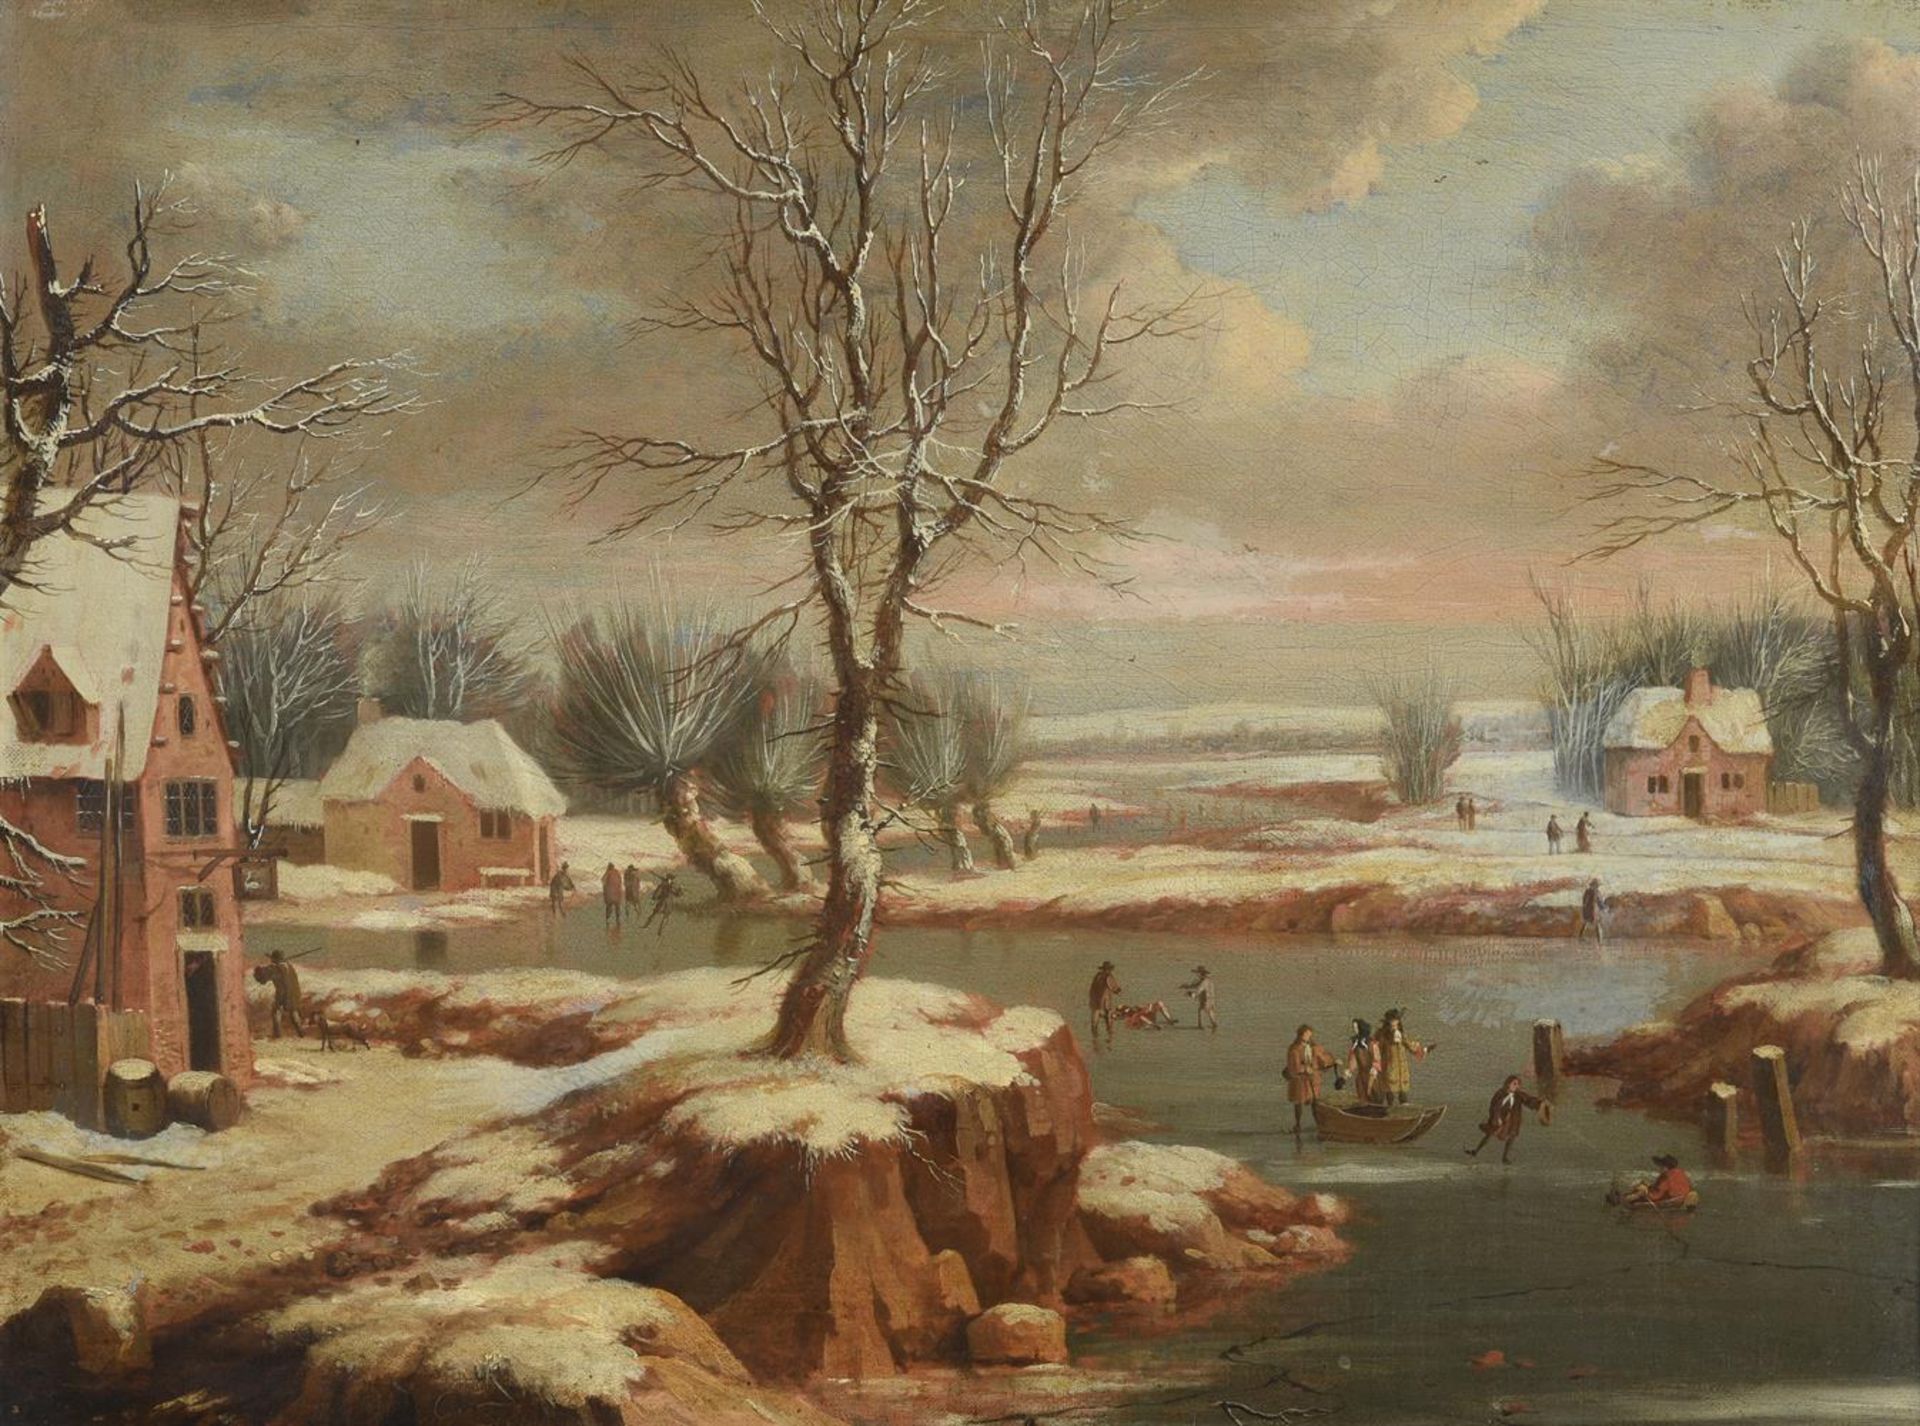 GERARD VAN EDEMA (DUTCH 1652 - 1700), WINTER LANDSCAPE WITH FIGURES SKATING